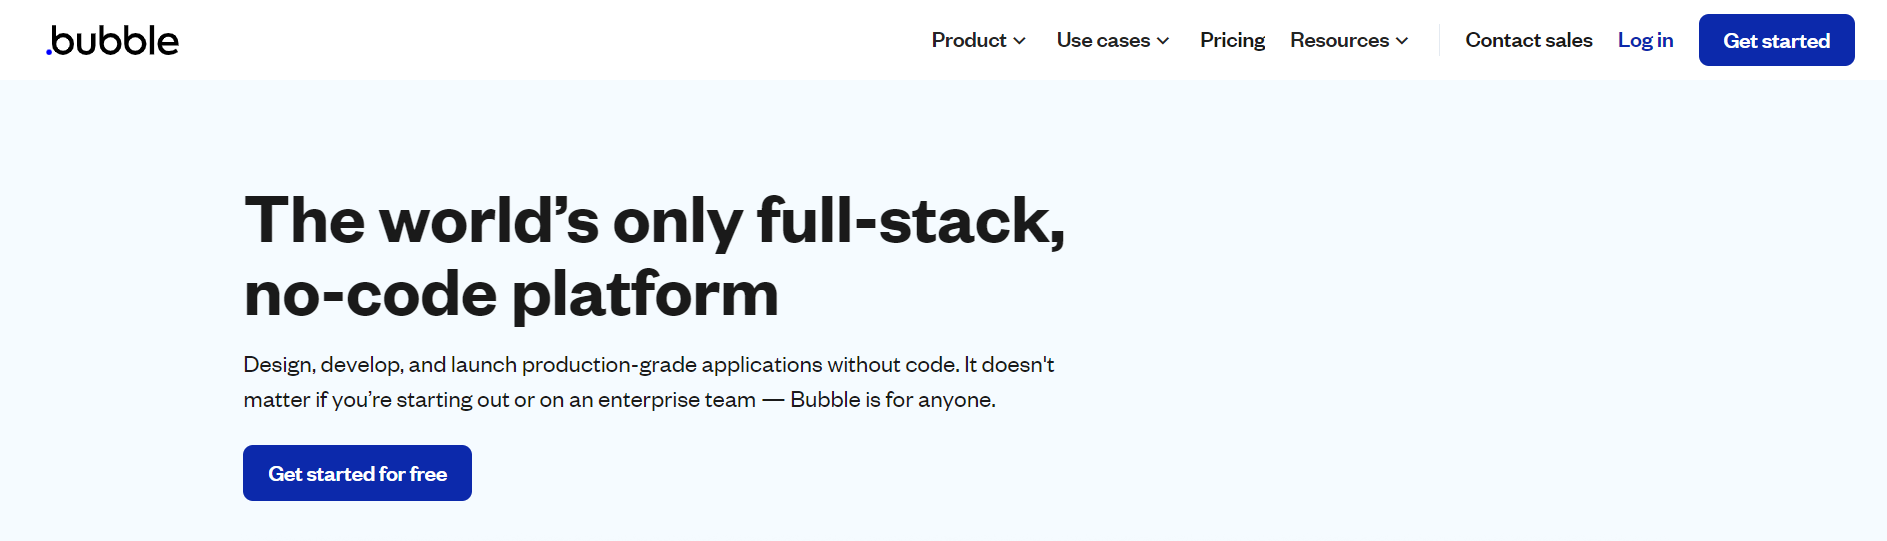 bubble no code platform